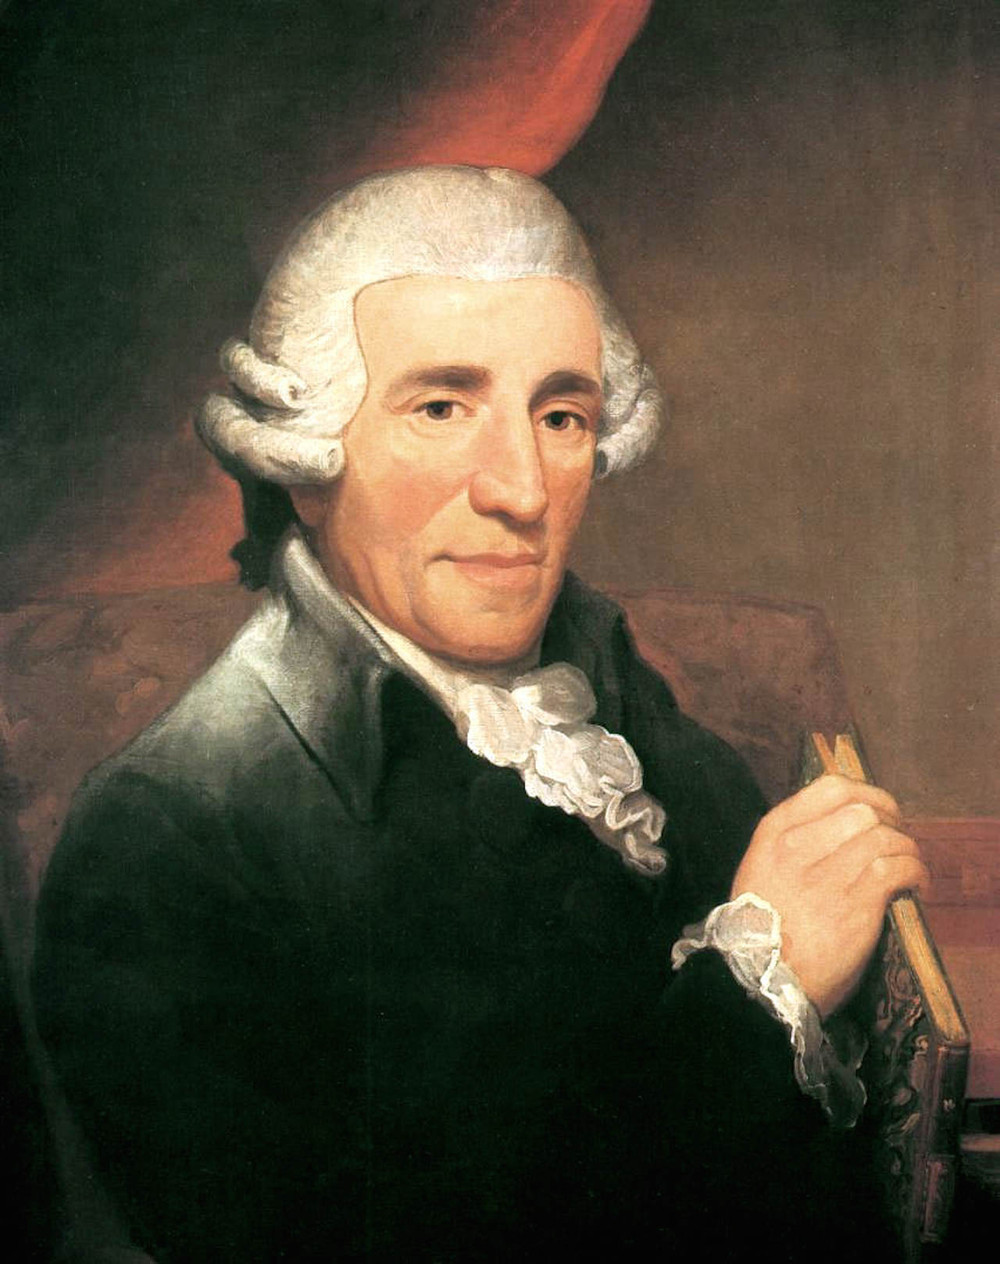 Franz_Joseph_Haydn_1732-1809.jpg